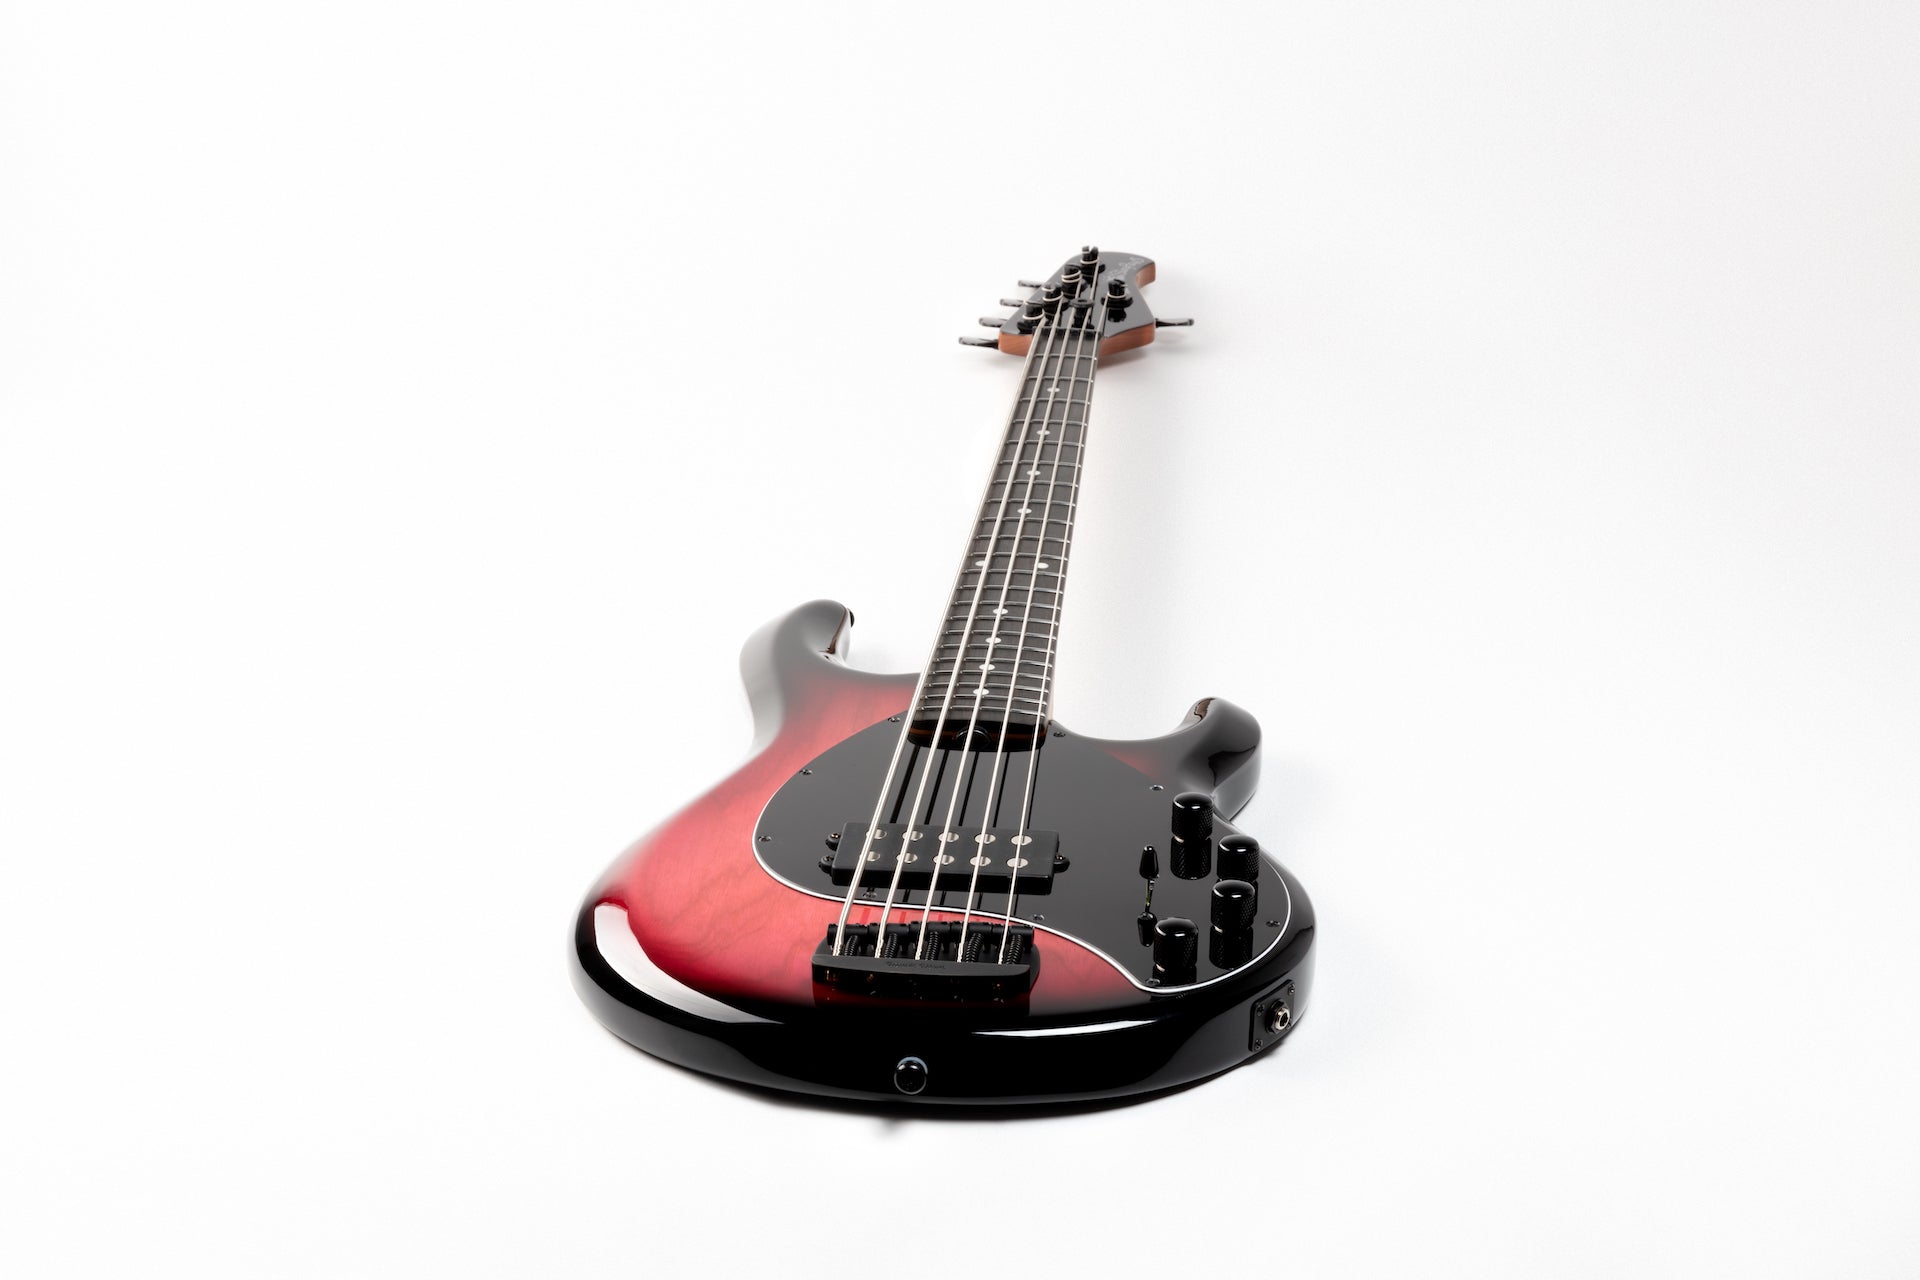 Ernie Ball Music Man StingRay Special 5 H Bass Guitar - Raspberry Burst with Ebony Fingerboard F96484 - HIENDGUITAR   Musicman bass